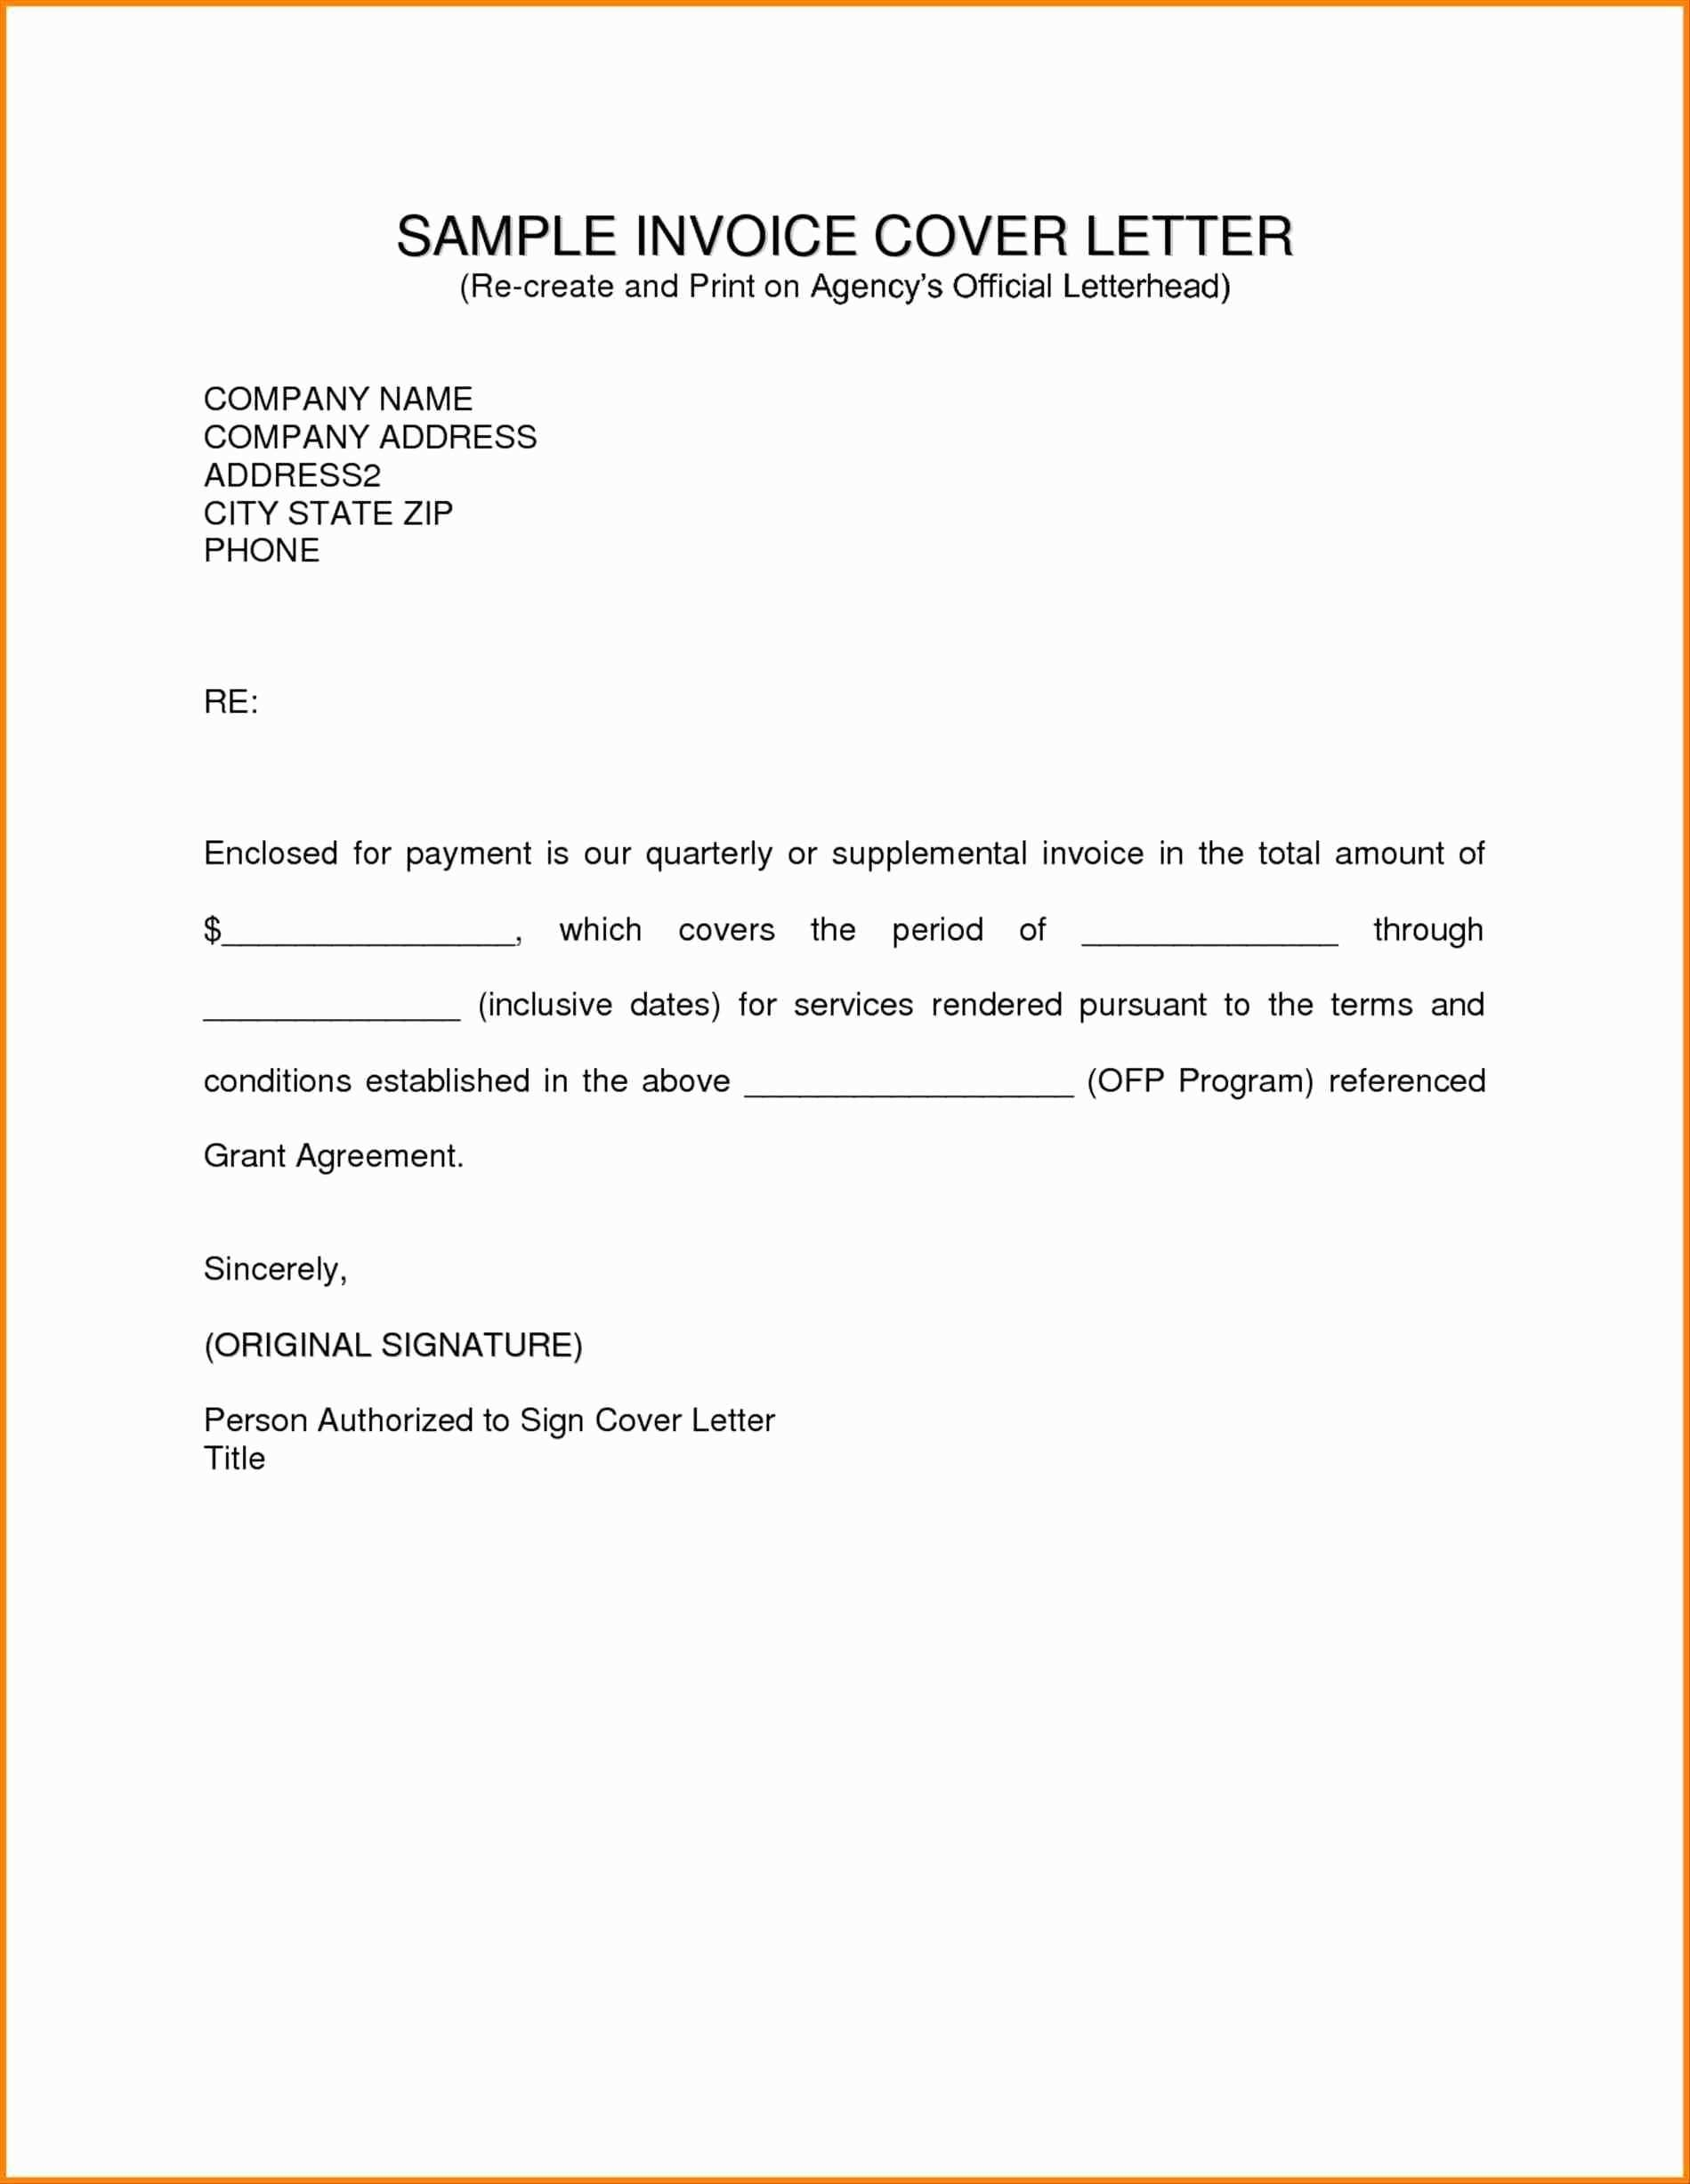 Sample Letter Explaining Invoice For Services Rendered